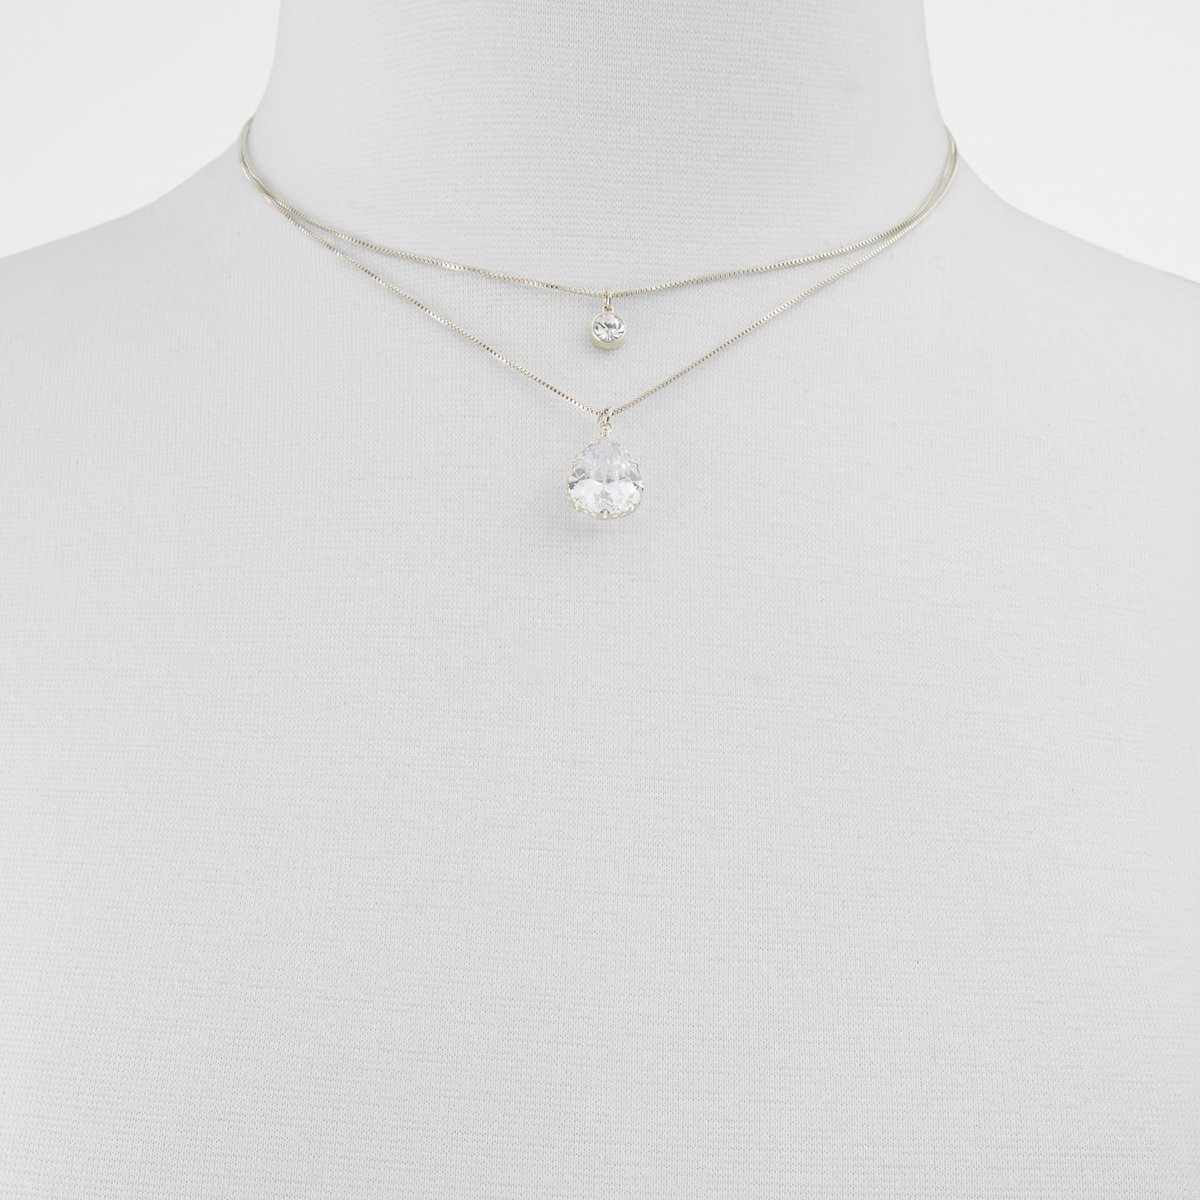 Beauceronee Silver/Clear Multi Women's Necklaces | ALDO Canada